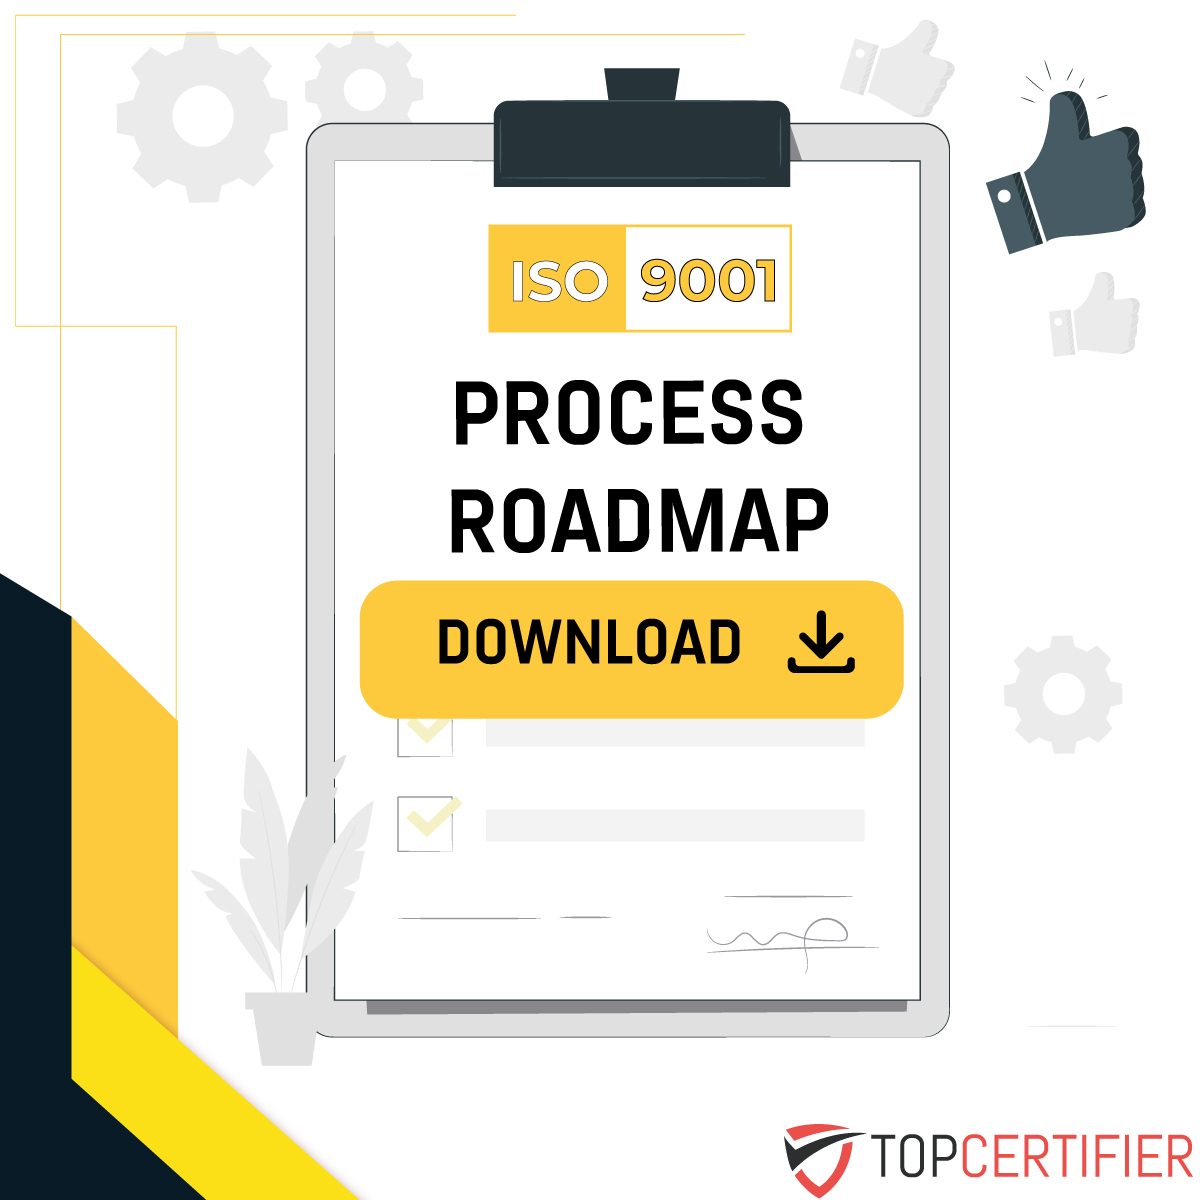 ISO 9001 Process Roadmap